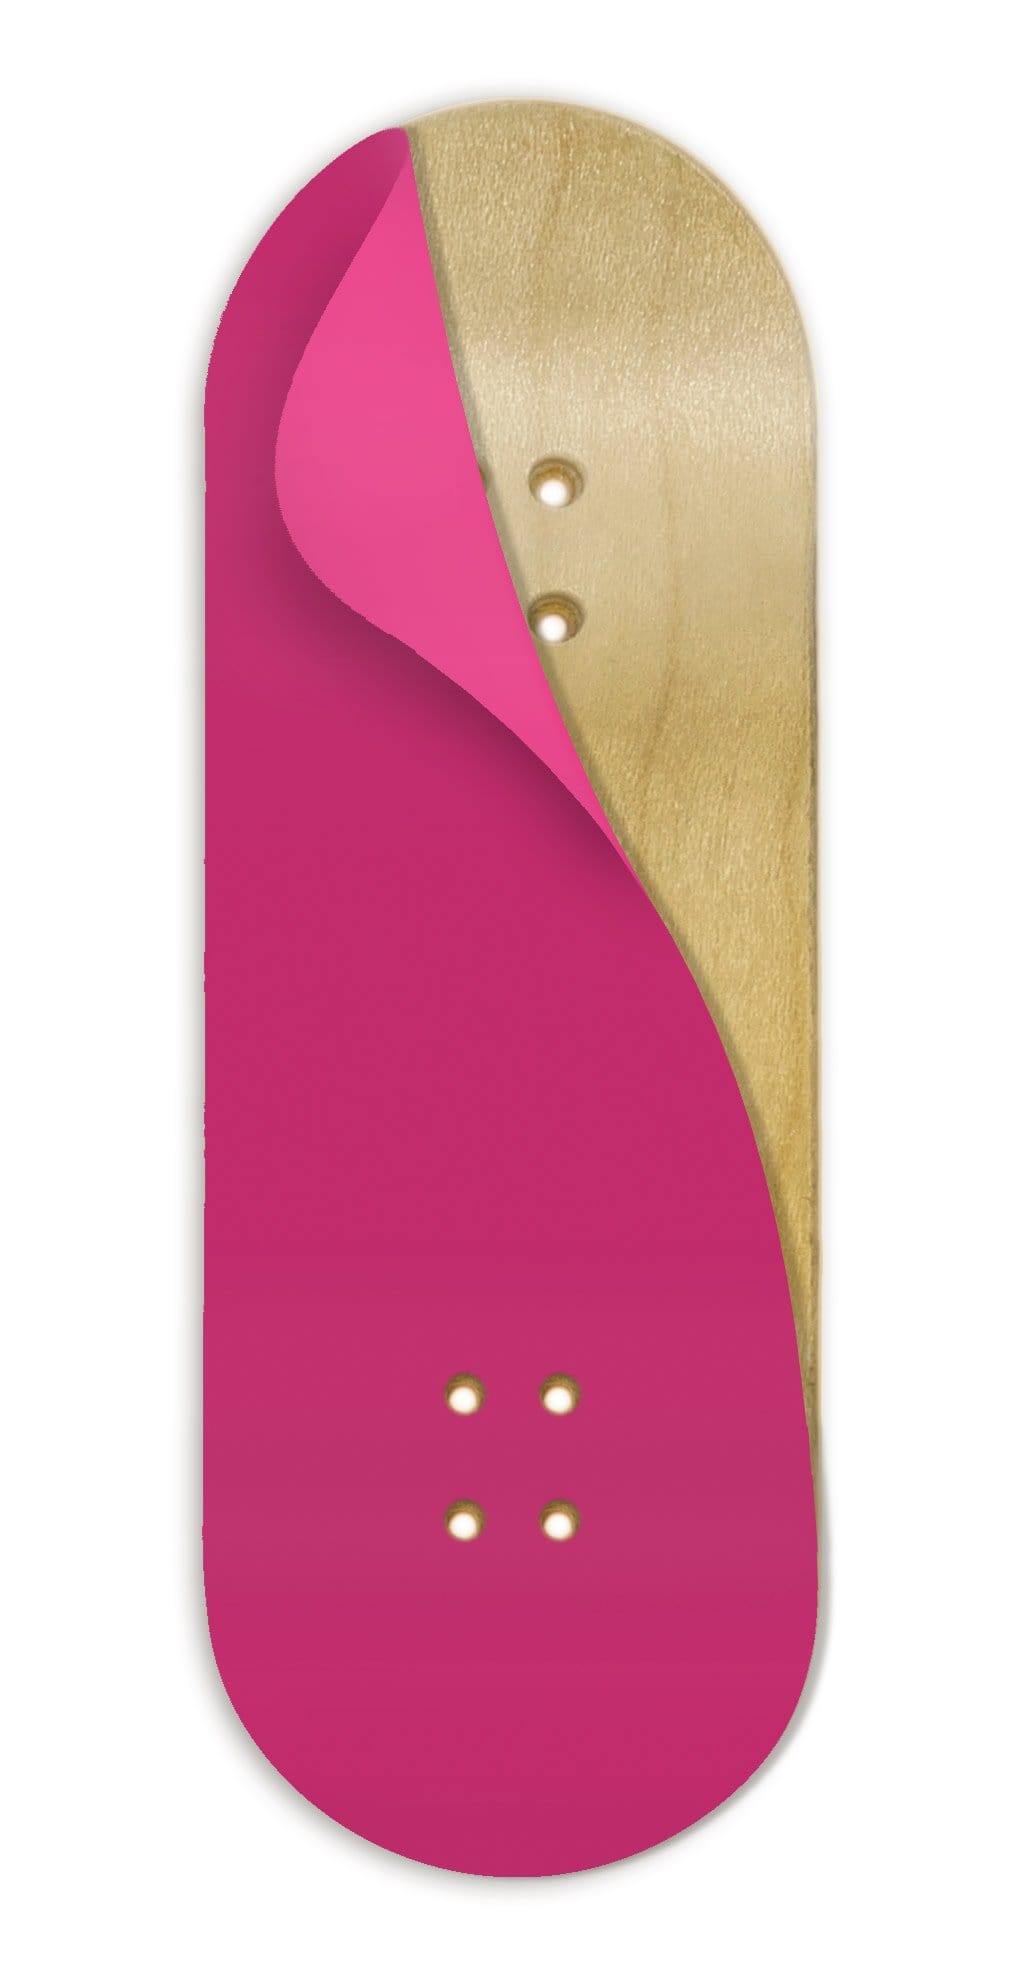 Teak Tuning Teak Swap Fingerboard Deck & ColorBlock Wrap - "Bubblegum Pink" - 32mm x 97mm